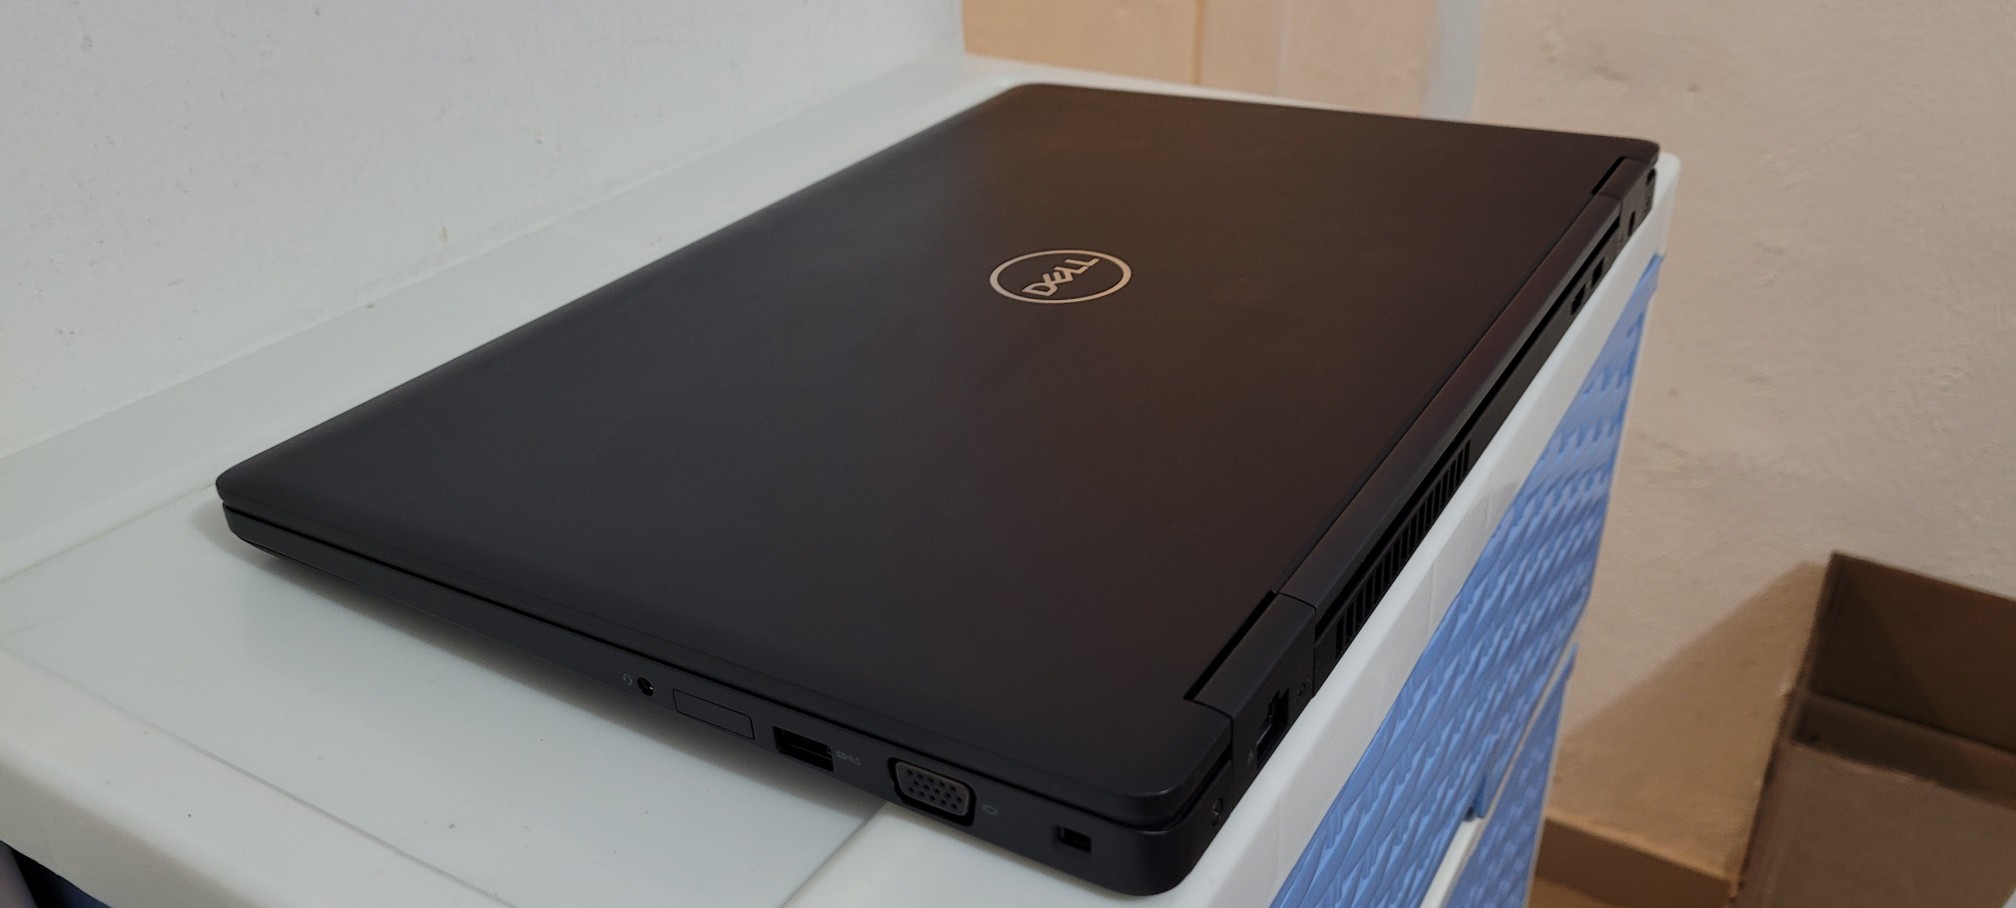 computadoras y laptops - Laptop Dell 5570 Core i7 6ta Gen Ram 16gb ddr4 Disco SSD 512GB Aty Radeon R7 2gb 2